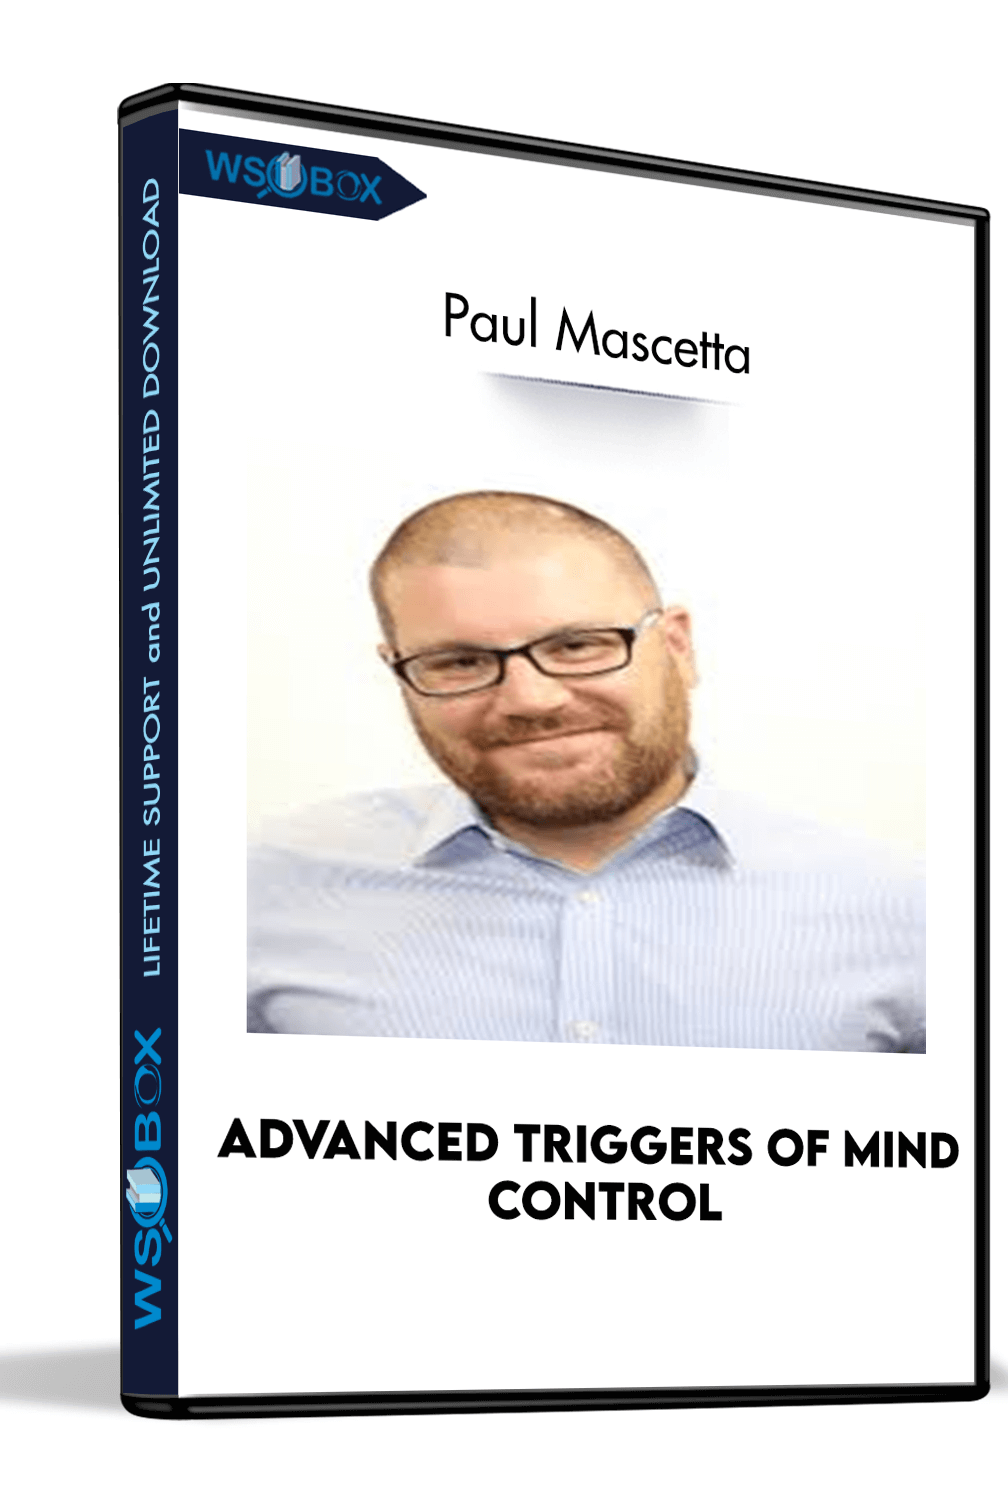 Advanced Triggers of Mind Control – Paul Mascetta